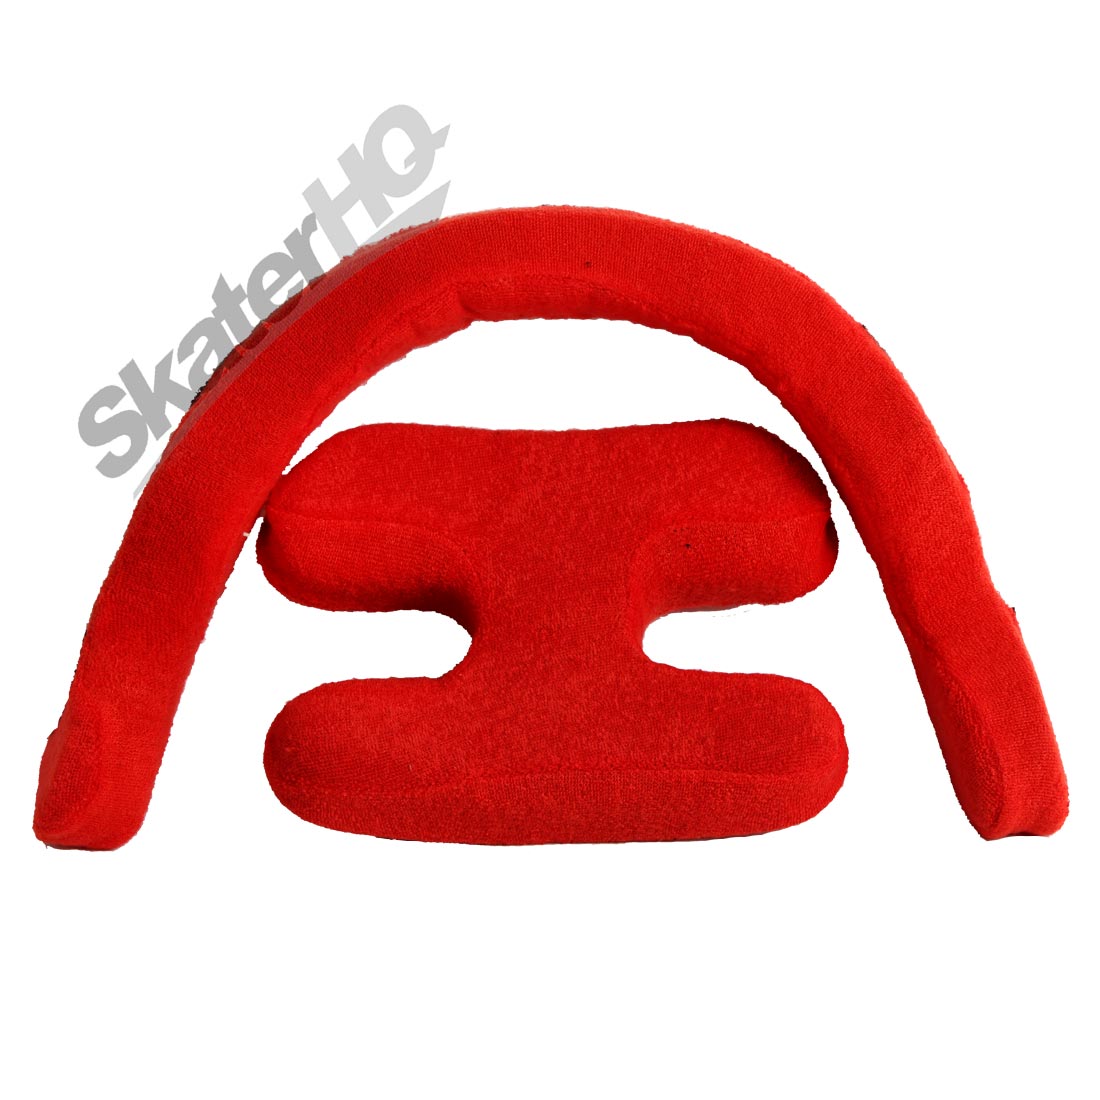 Triple 8 Sweatsaver Liner - Red - XXL Helmet liners